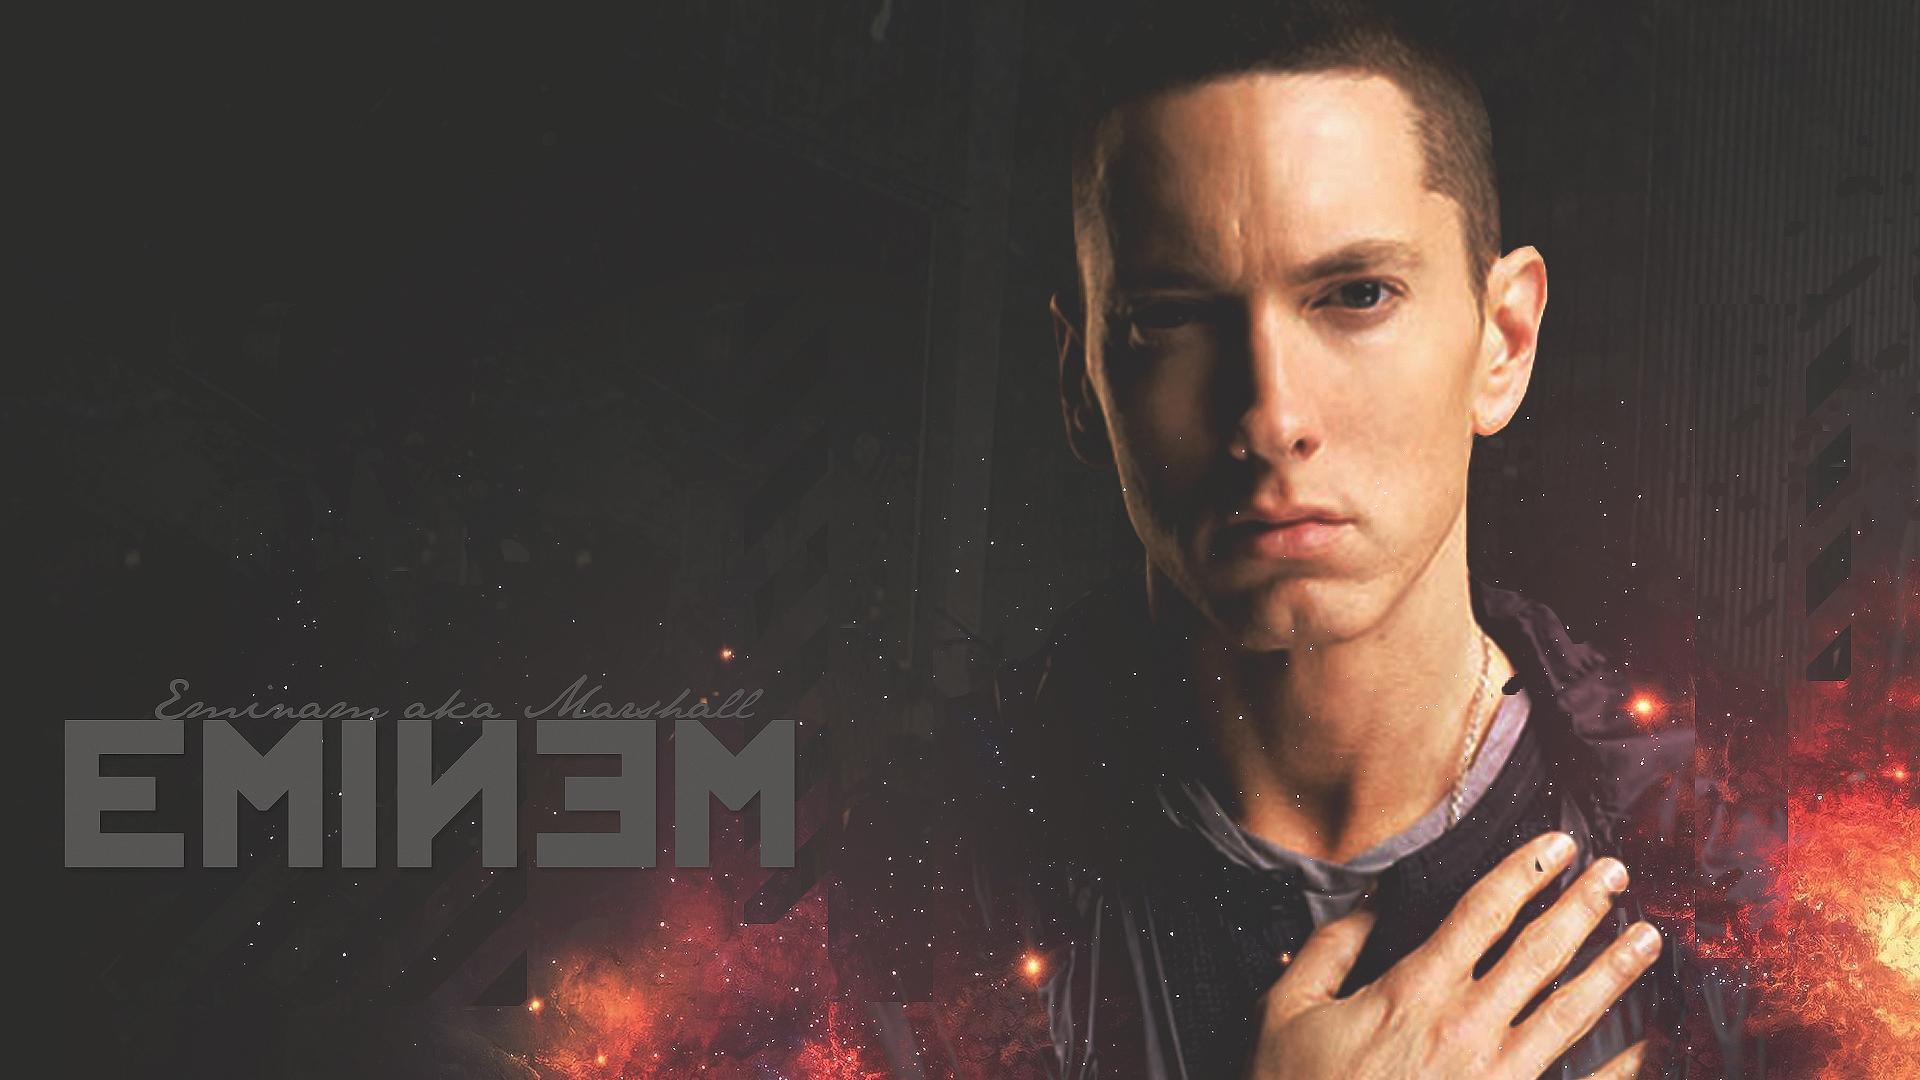 Eminem free wallpaper in high resolutions desktop background